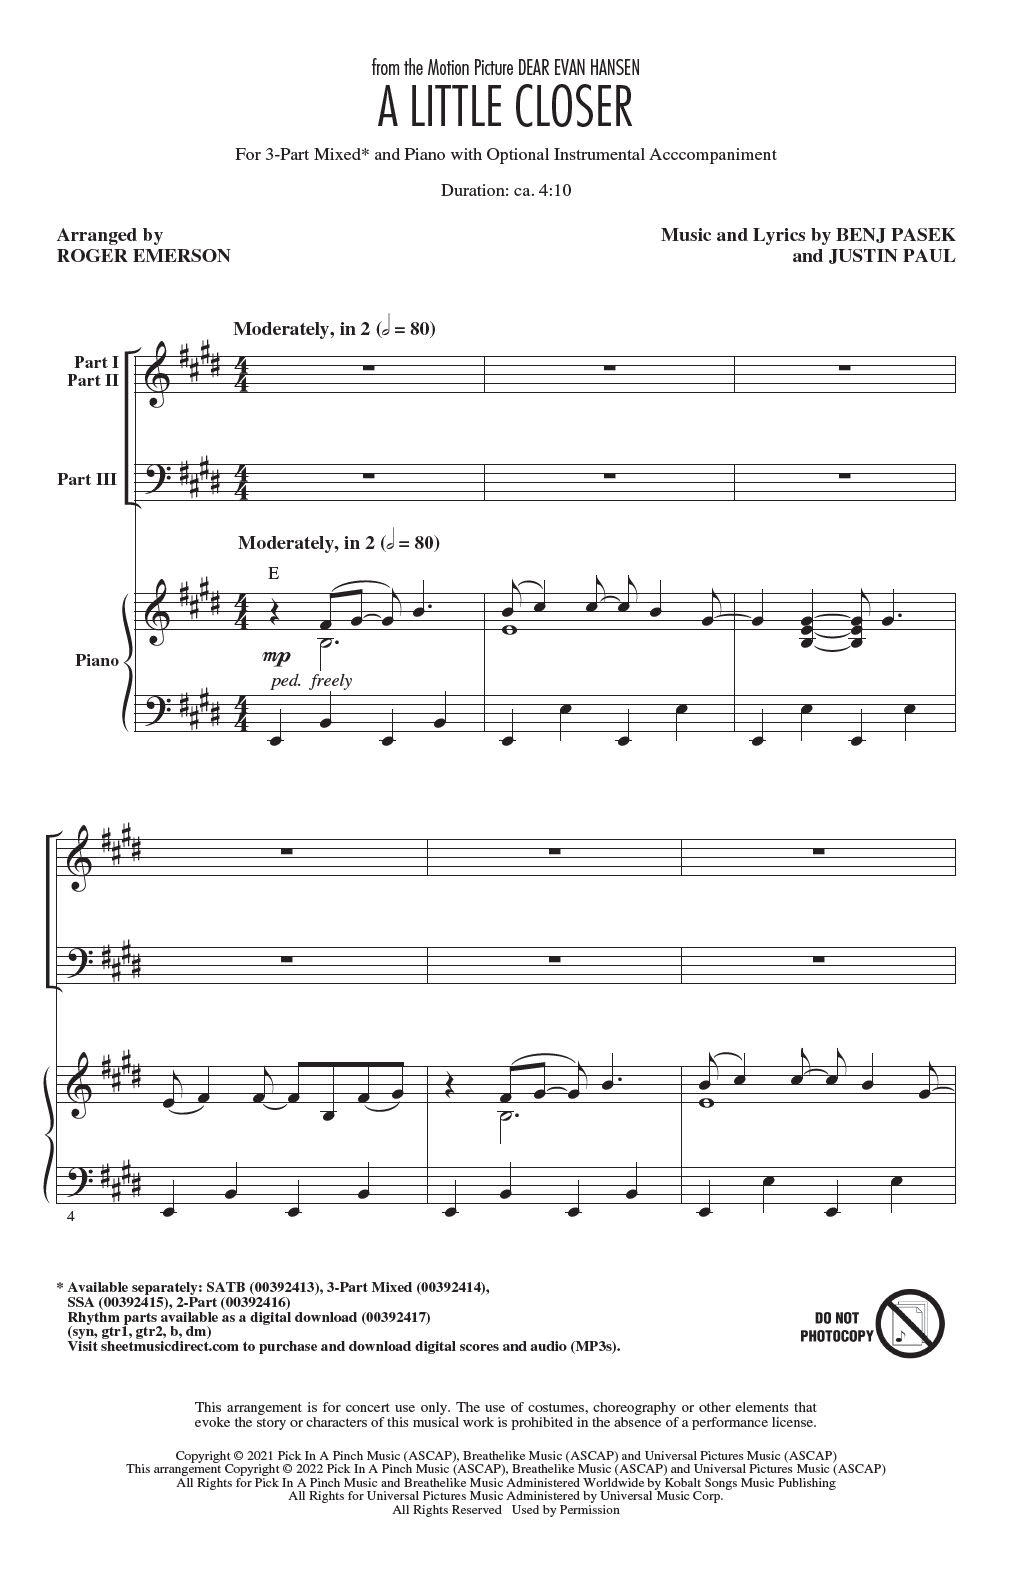 Pasek & Paul A Little Closer (from Dear Evan Hansen) (arr. Roger Emerson) Sheet Music Notes & Chords for 2-Part Choir - Download or Print PDF